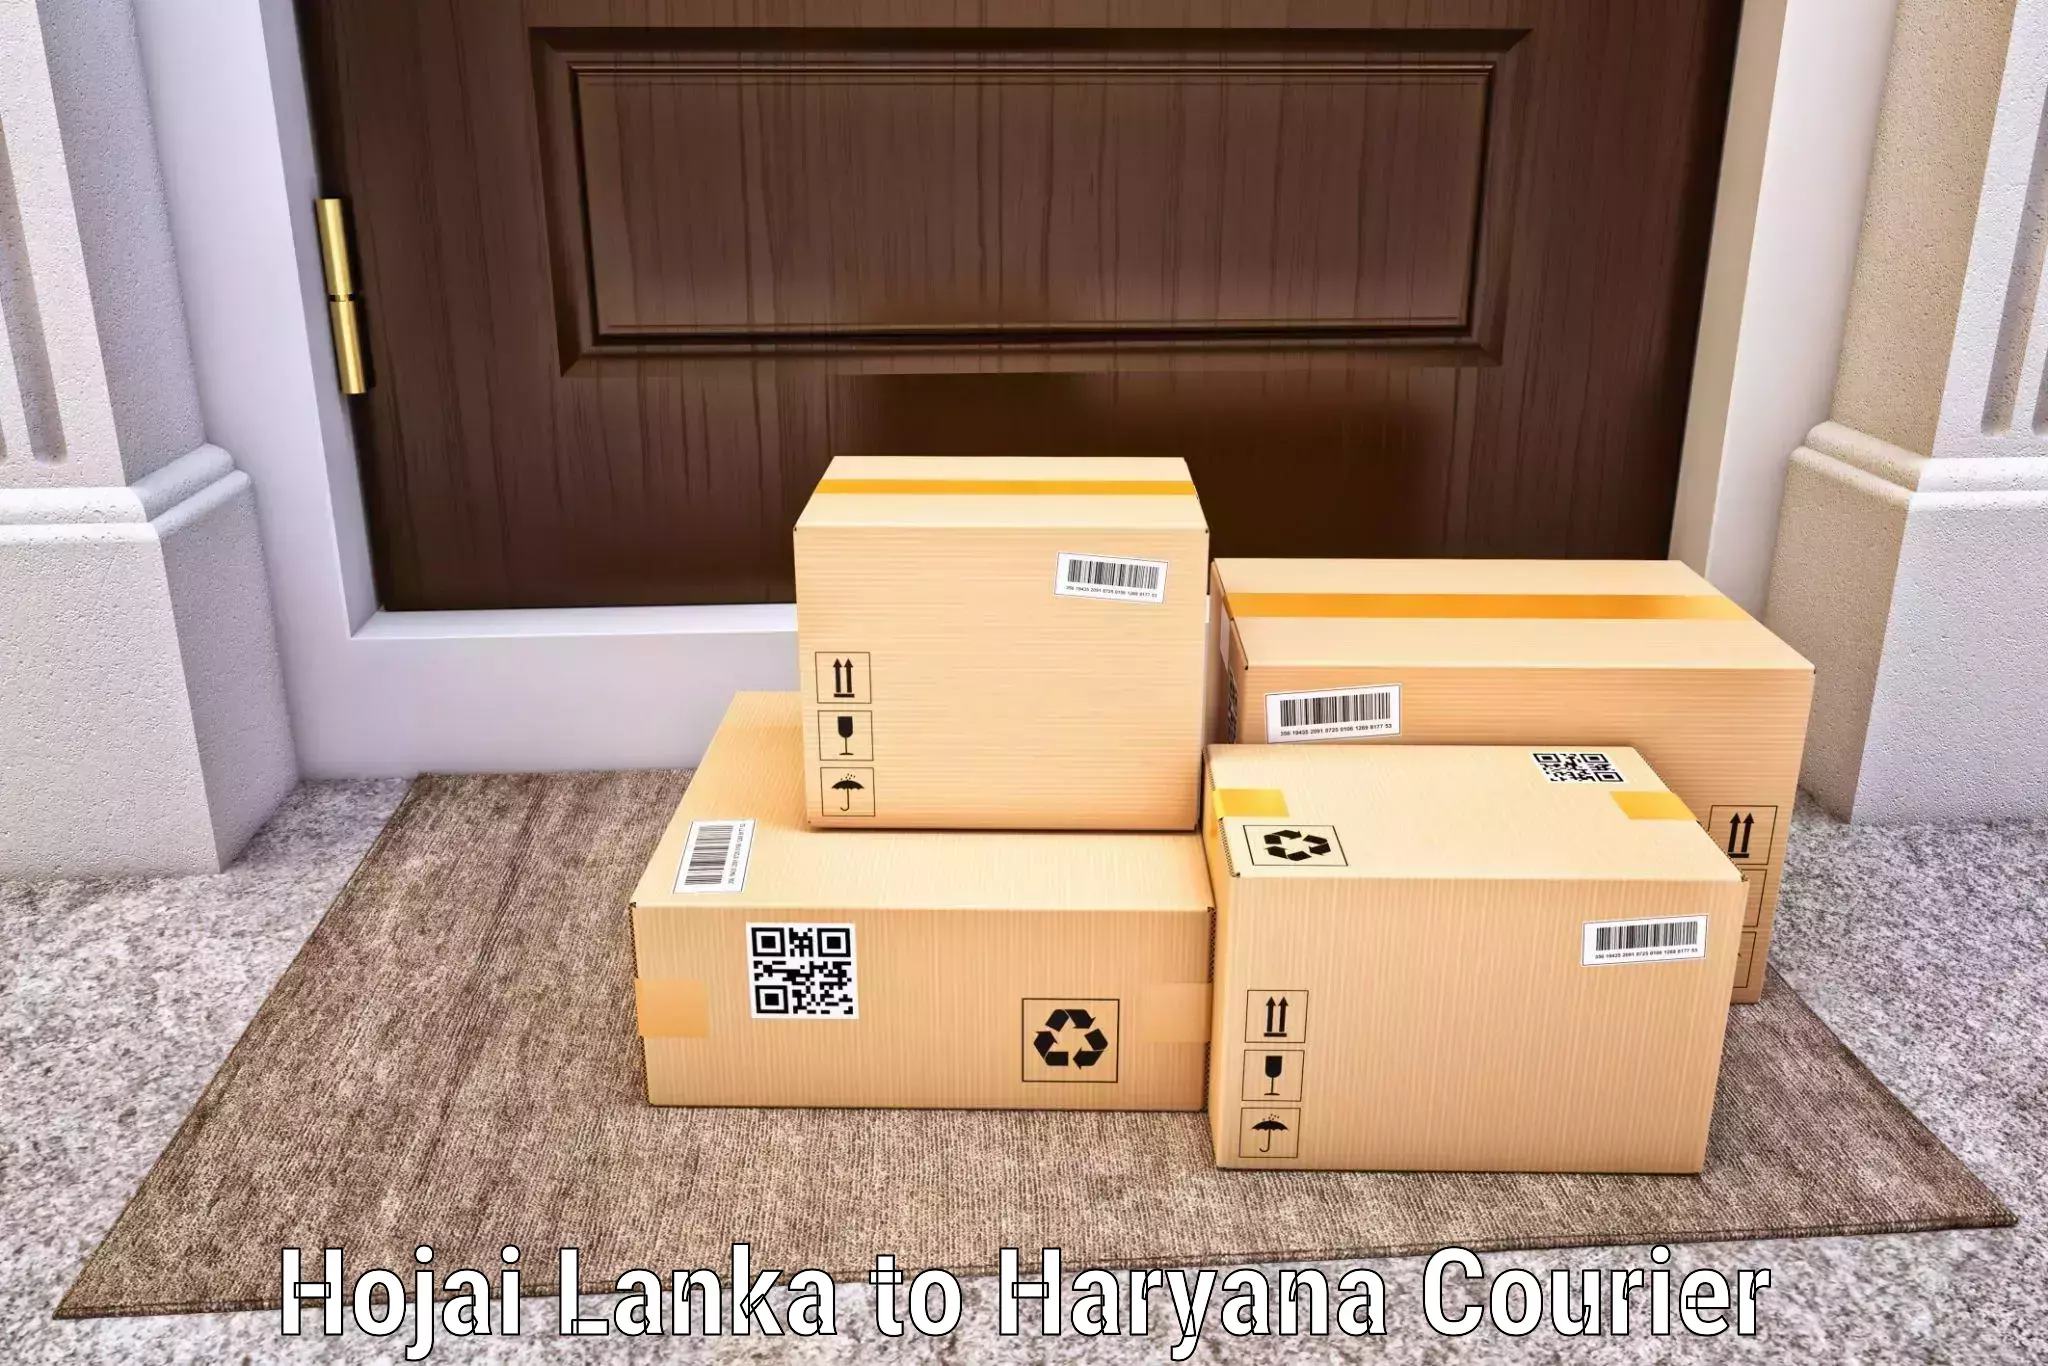 24-hour courier services Hojai Lanka to Gohana